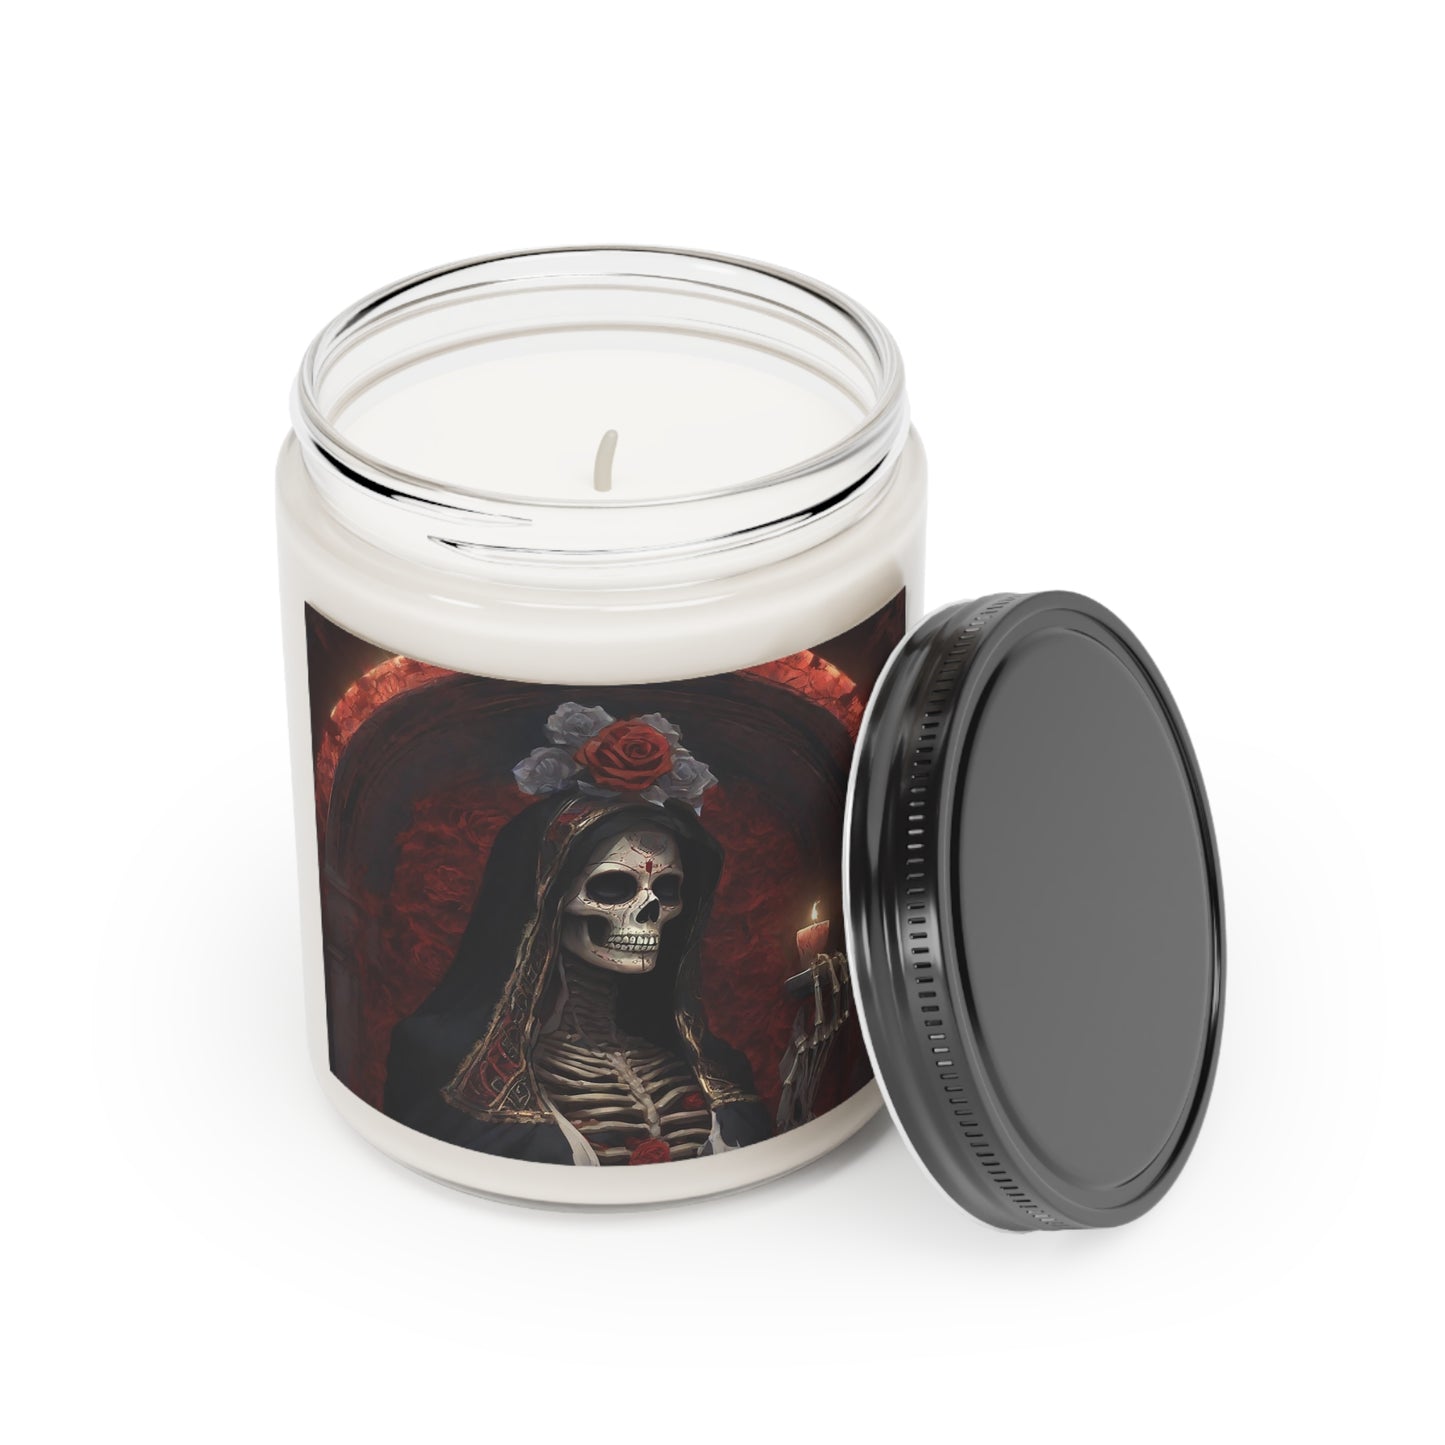 Santa Muerte Coconut Wax Scented Candle, 9oz